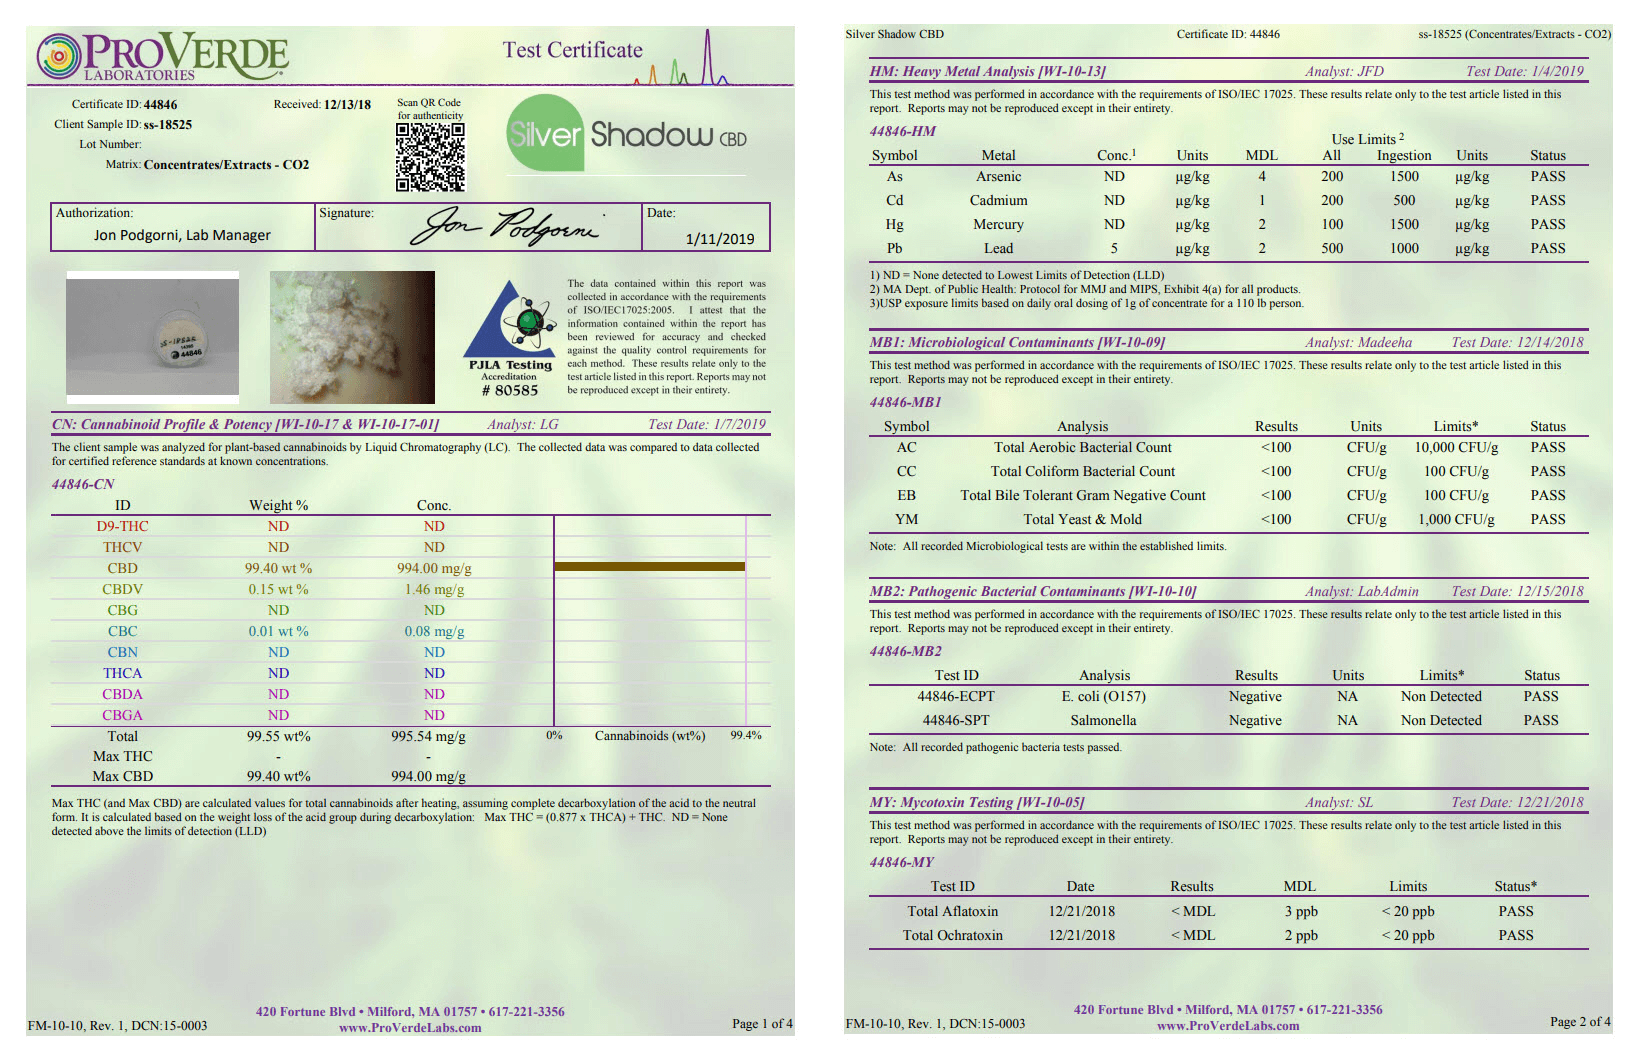 Certificate of Analysis (COFA) 1